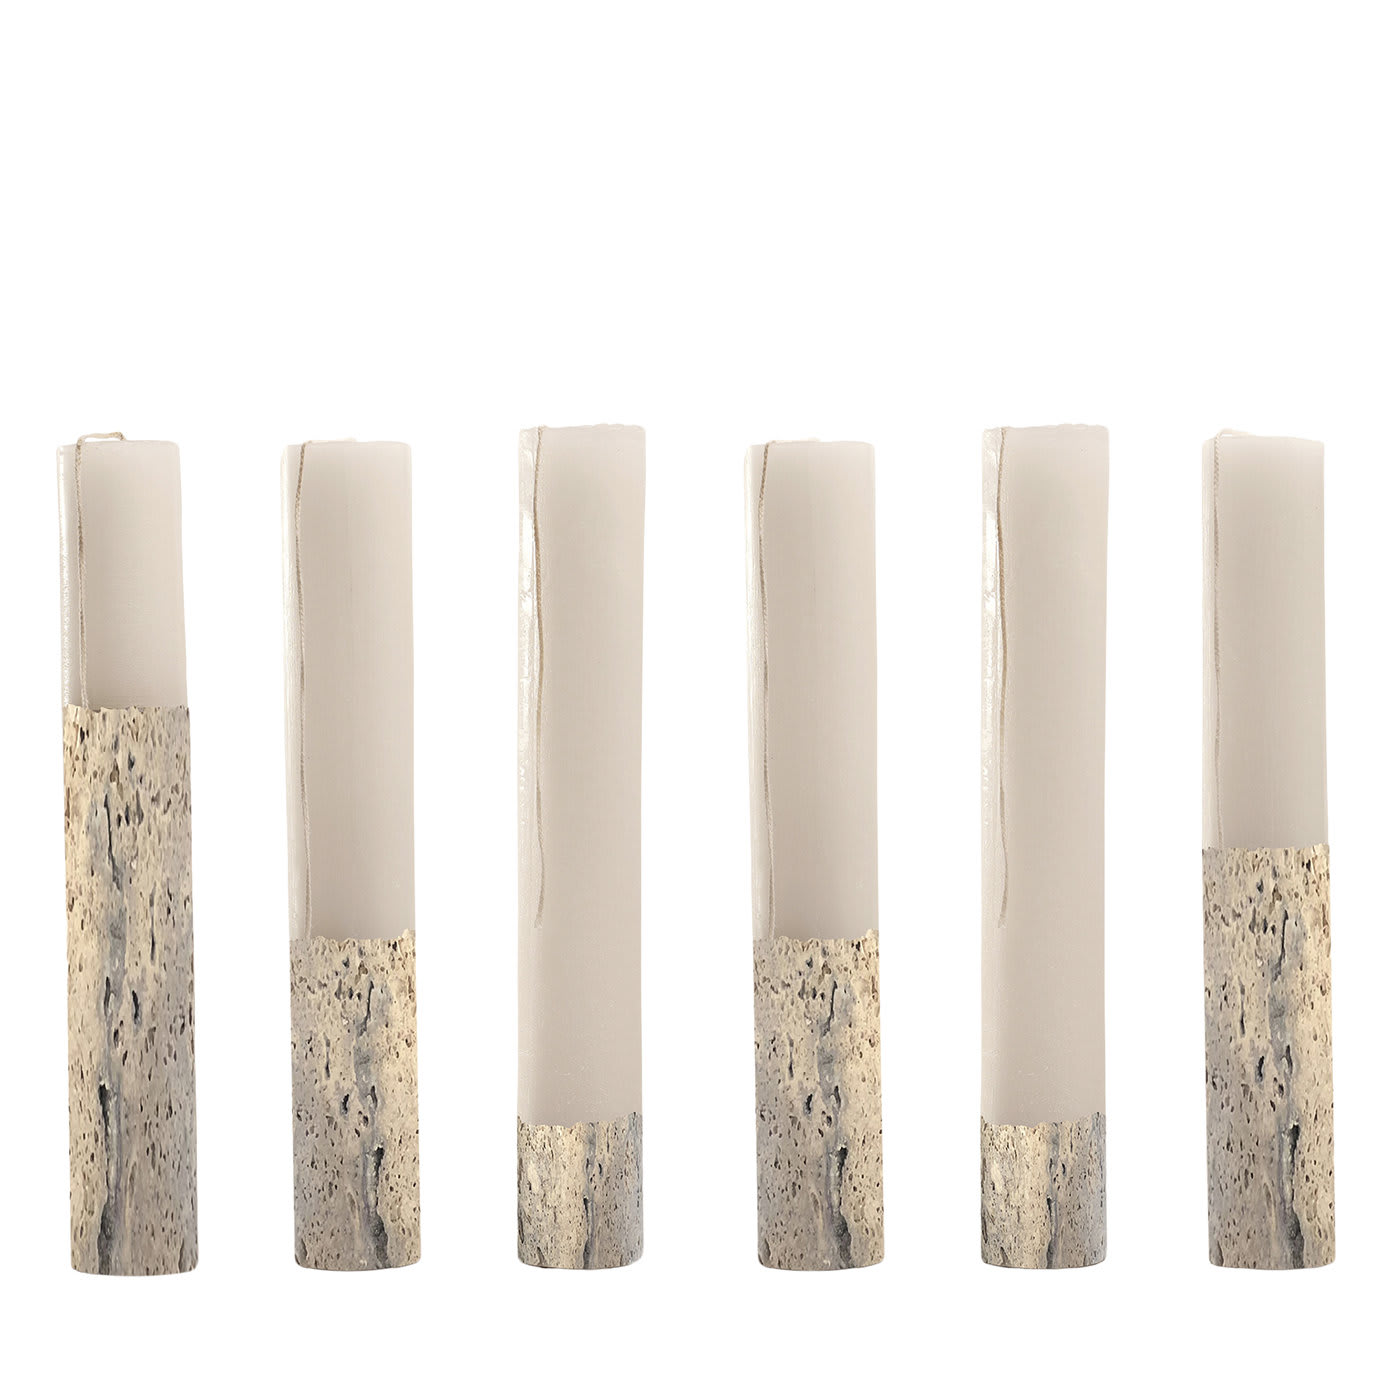 Flato Set of 6 Candles in Wax and Travertine by Emanuel Gargano - Emanuel Gargano